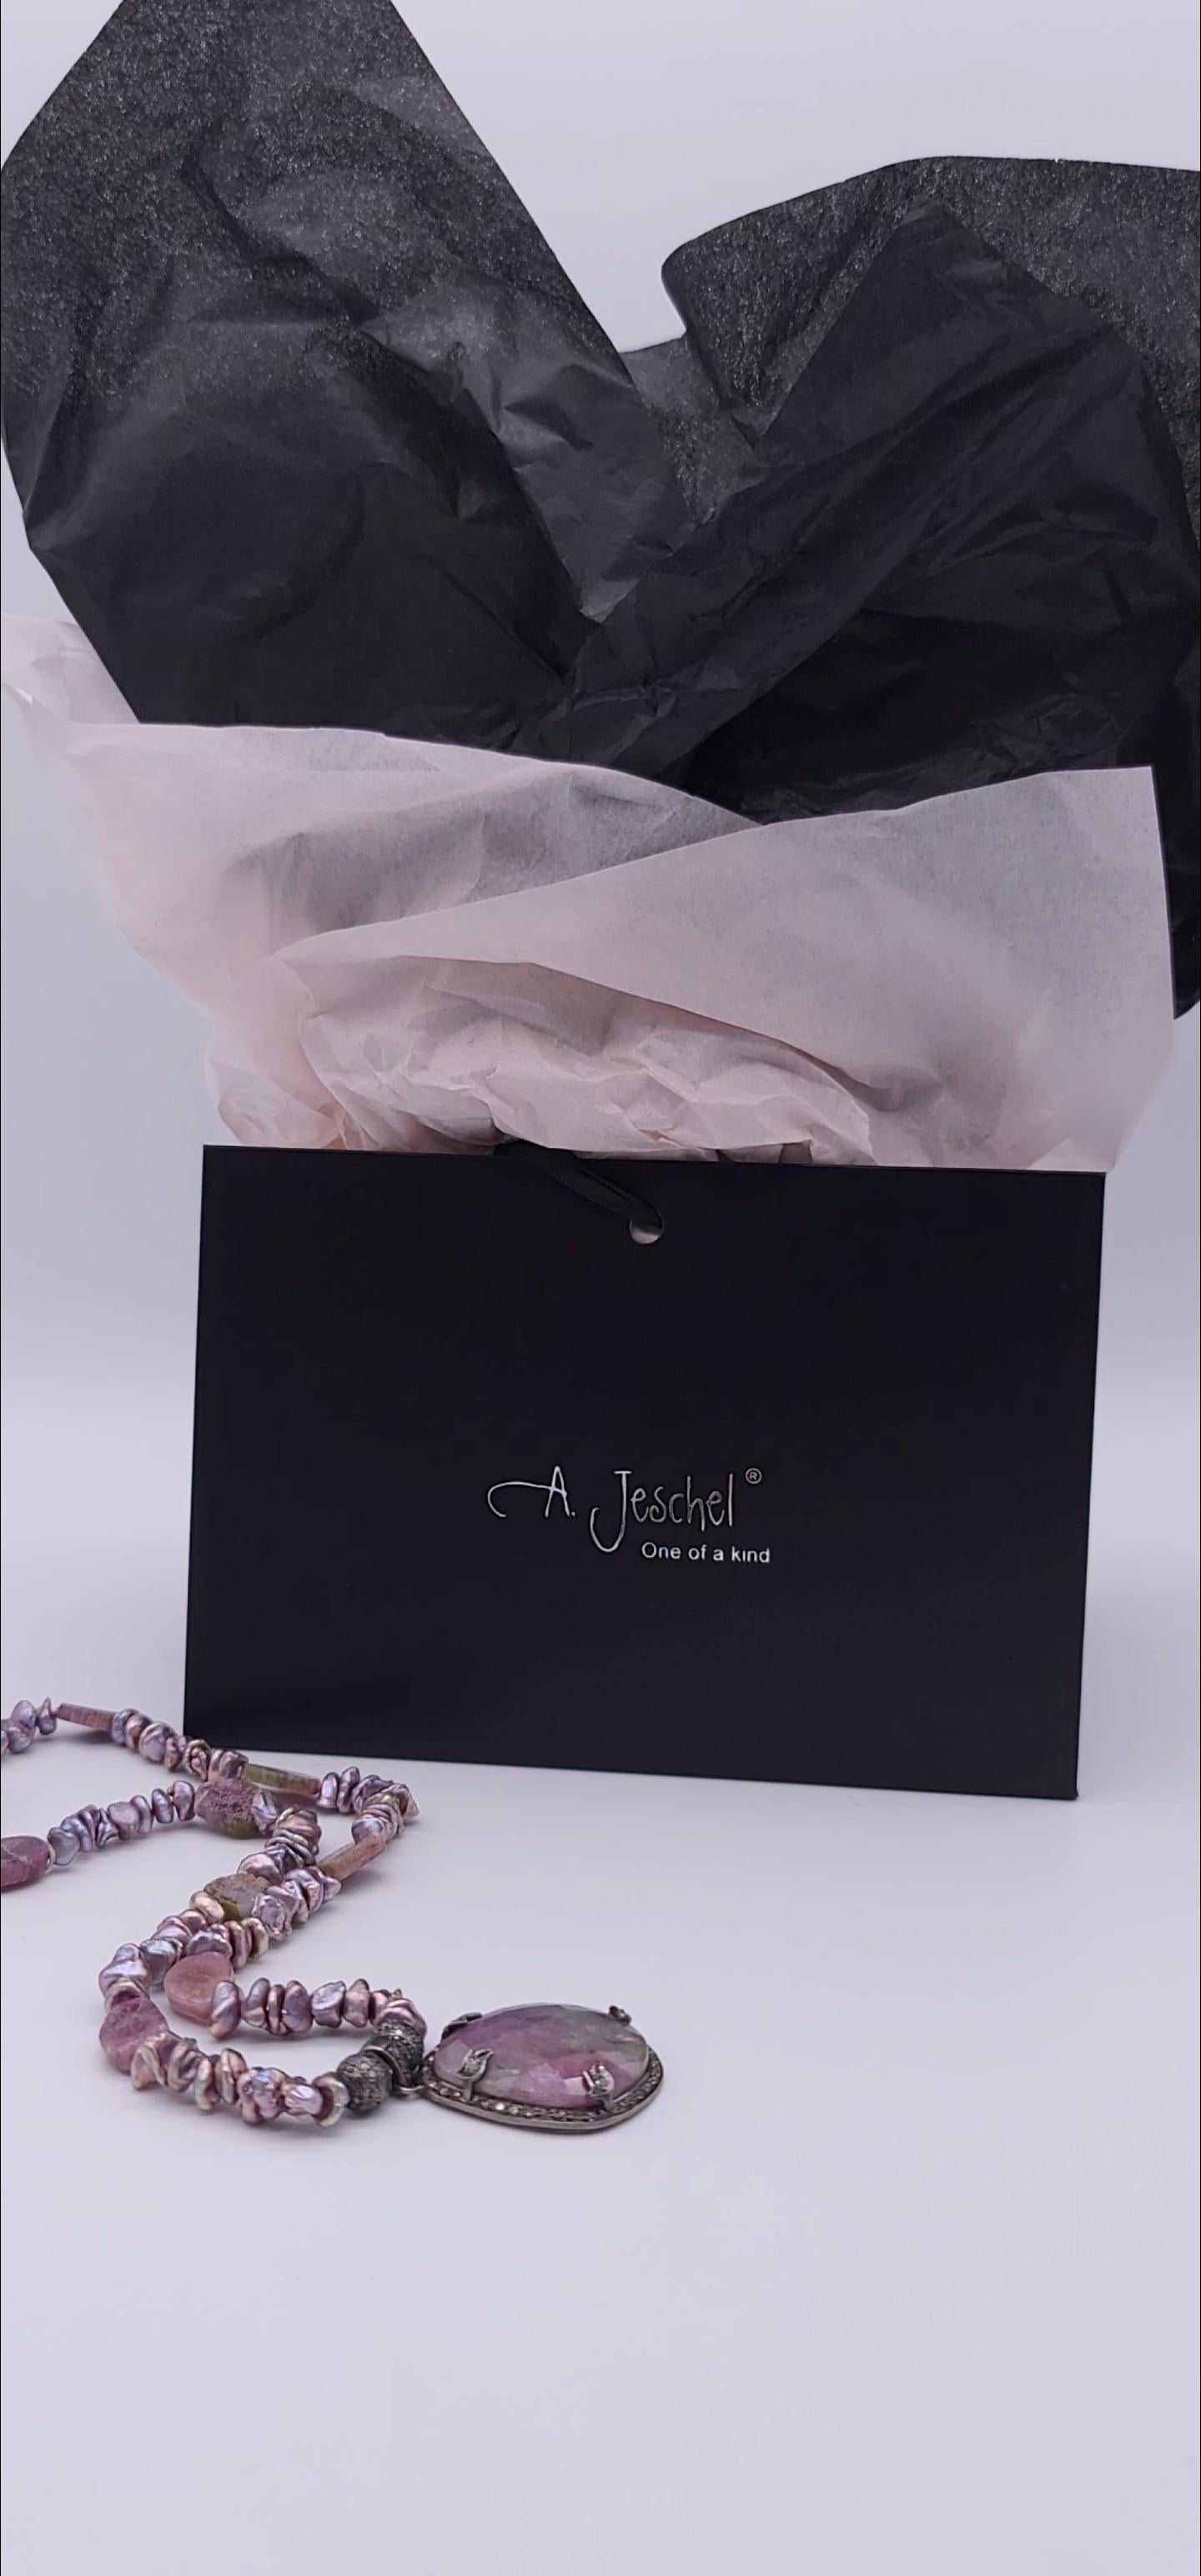 A.Jeschel Romantic Pink Tourmaline and Diamond Pendant Necklace For Sale 5